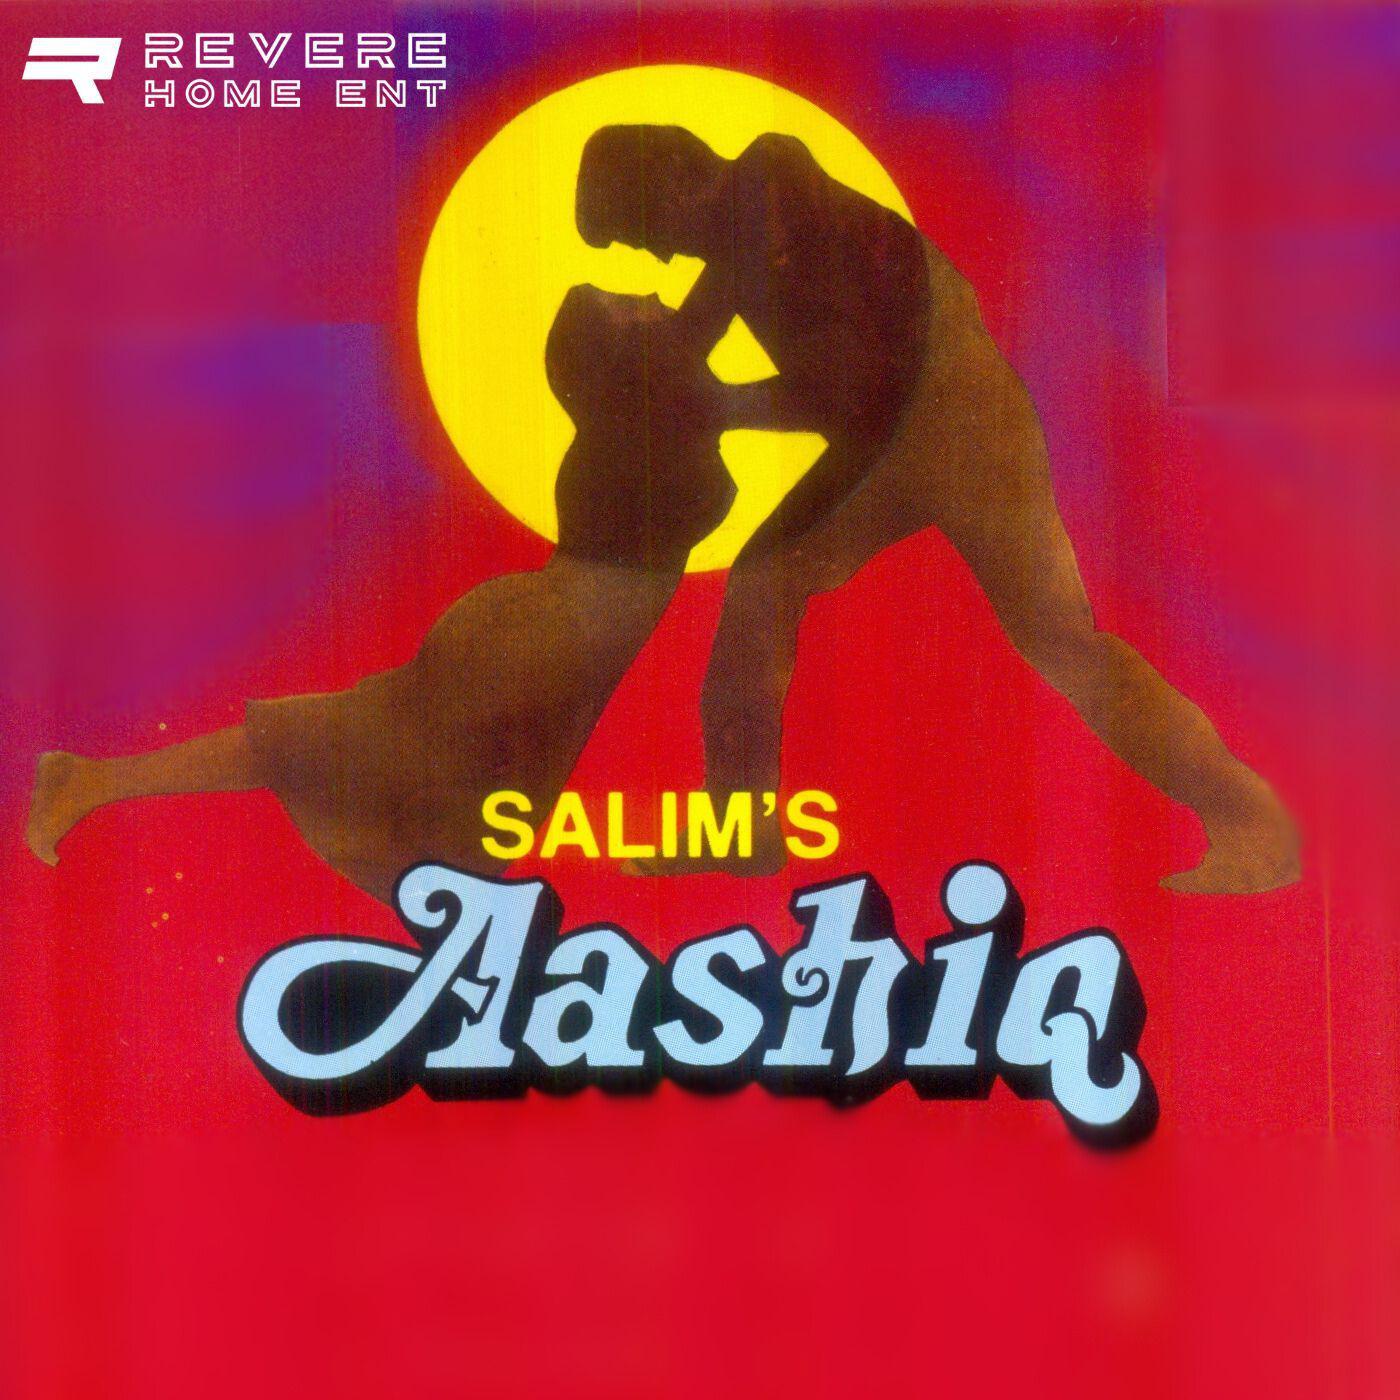 Постер альбома Aashiq